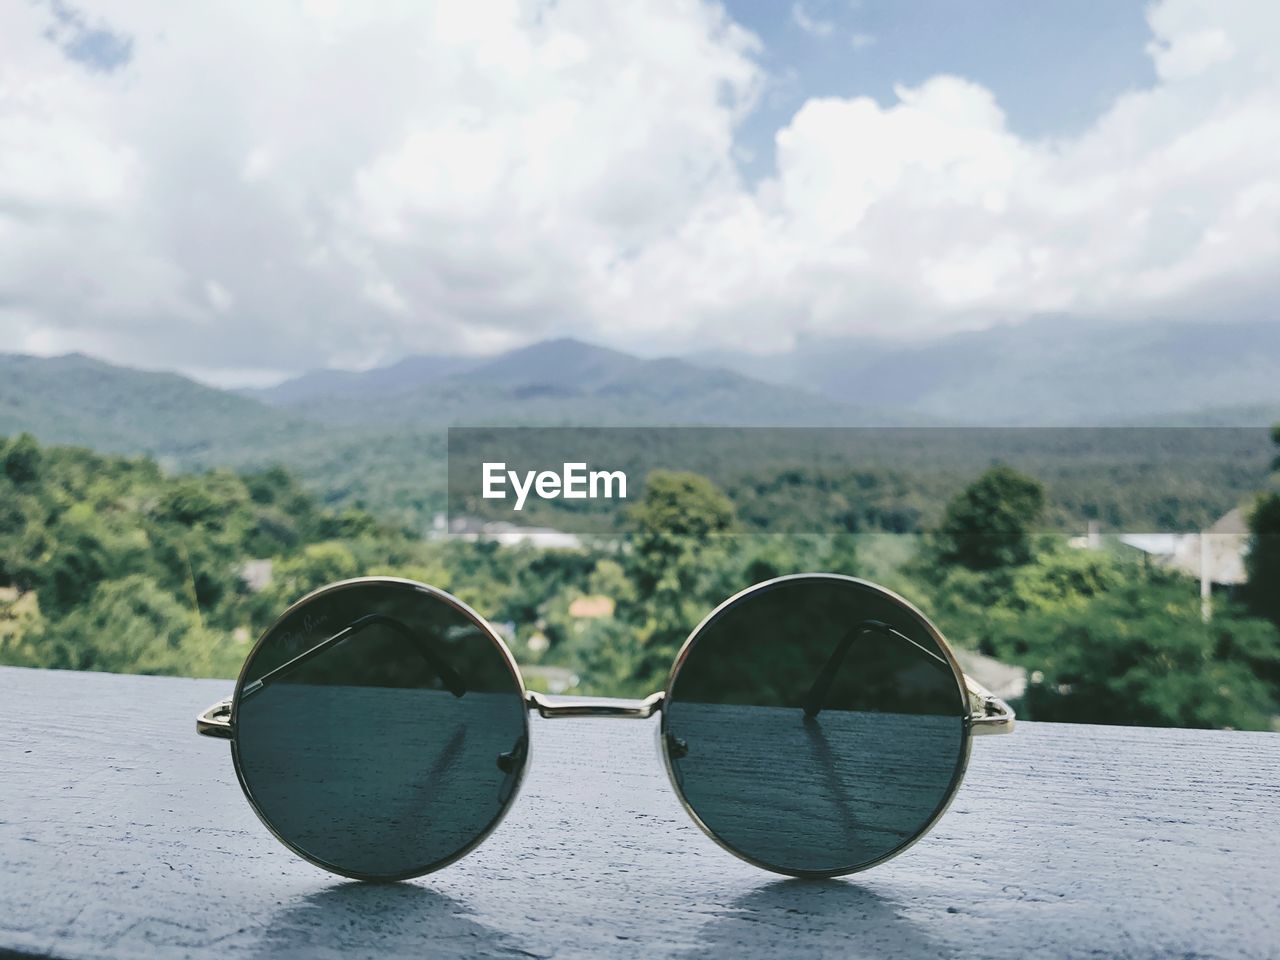 Sunglasses on mountain against sky